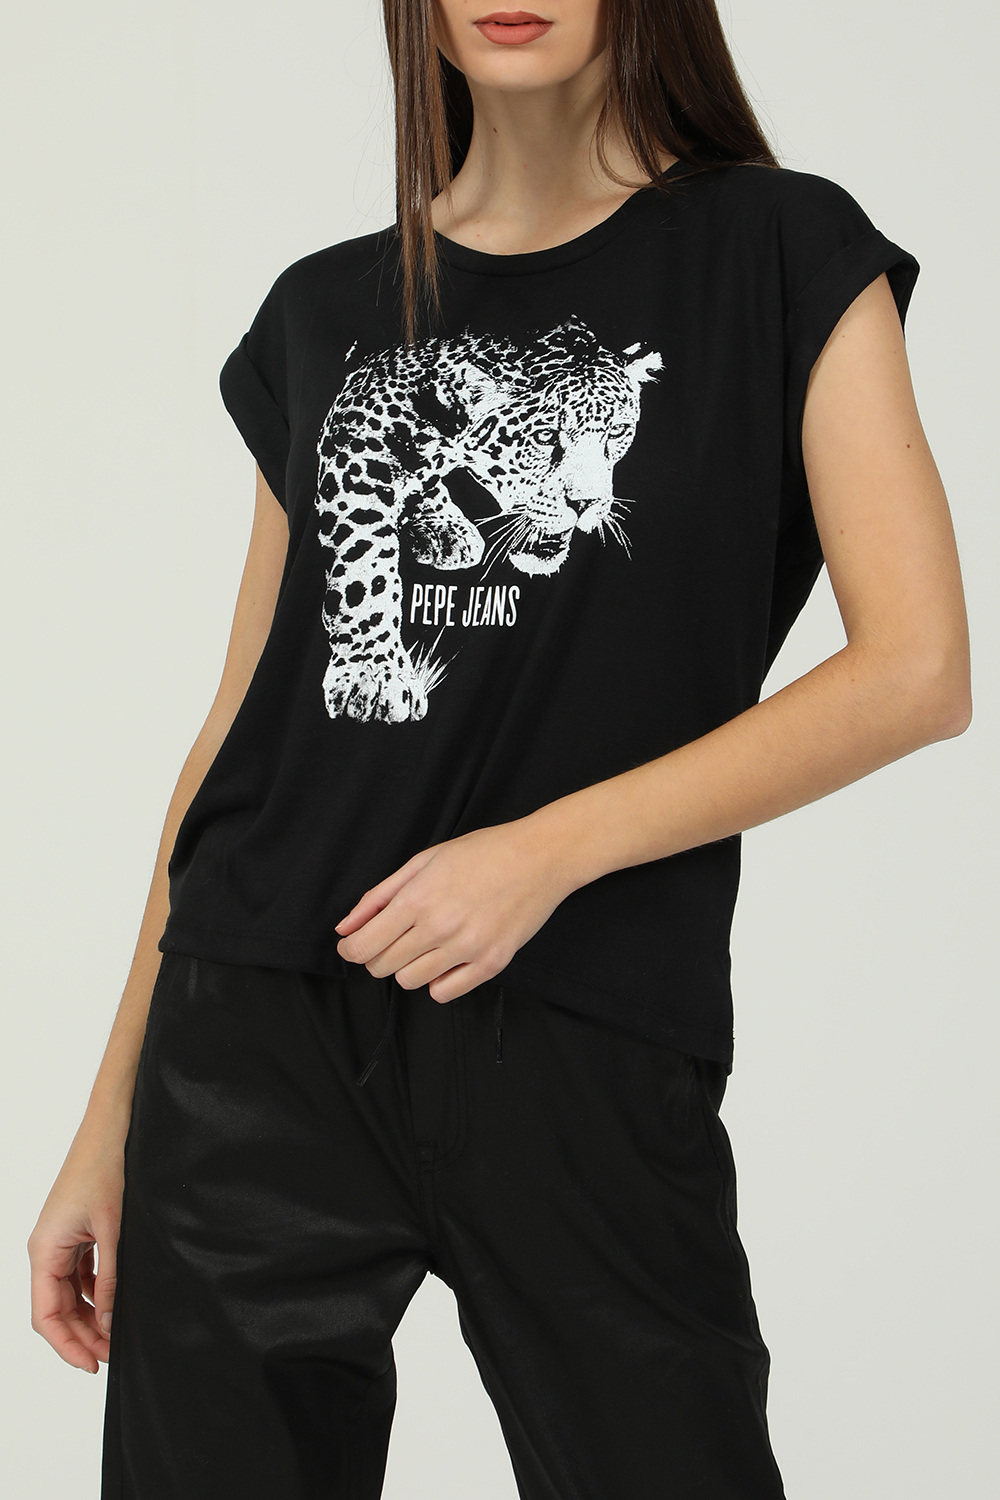 PEPE JEANS – Γυναικεια κοντομανικη μπλουζα PEPE JEANS PANTI μαυρη